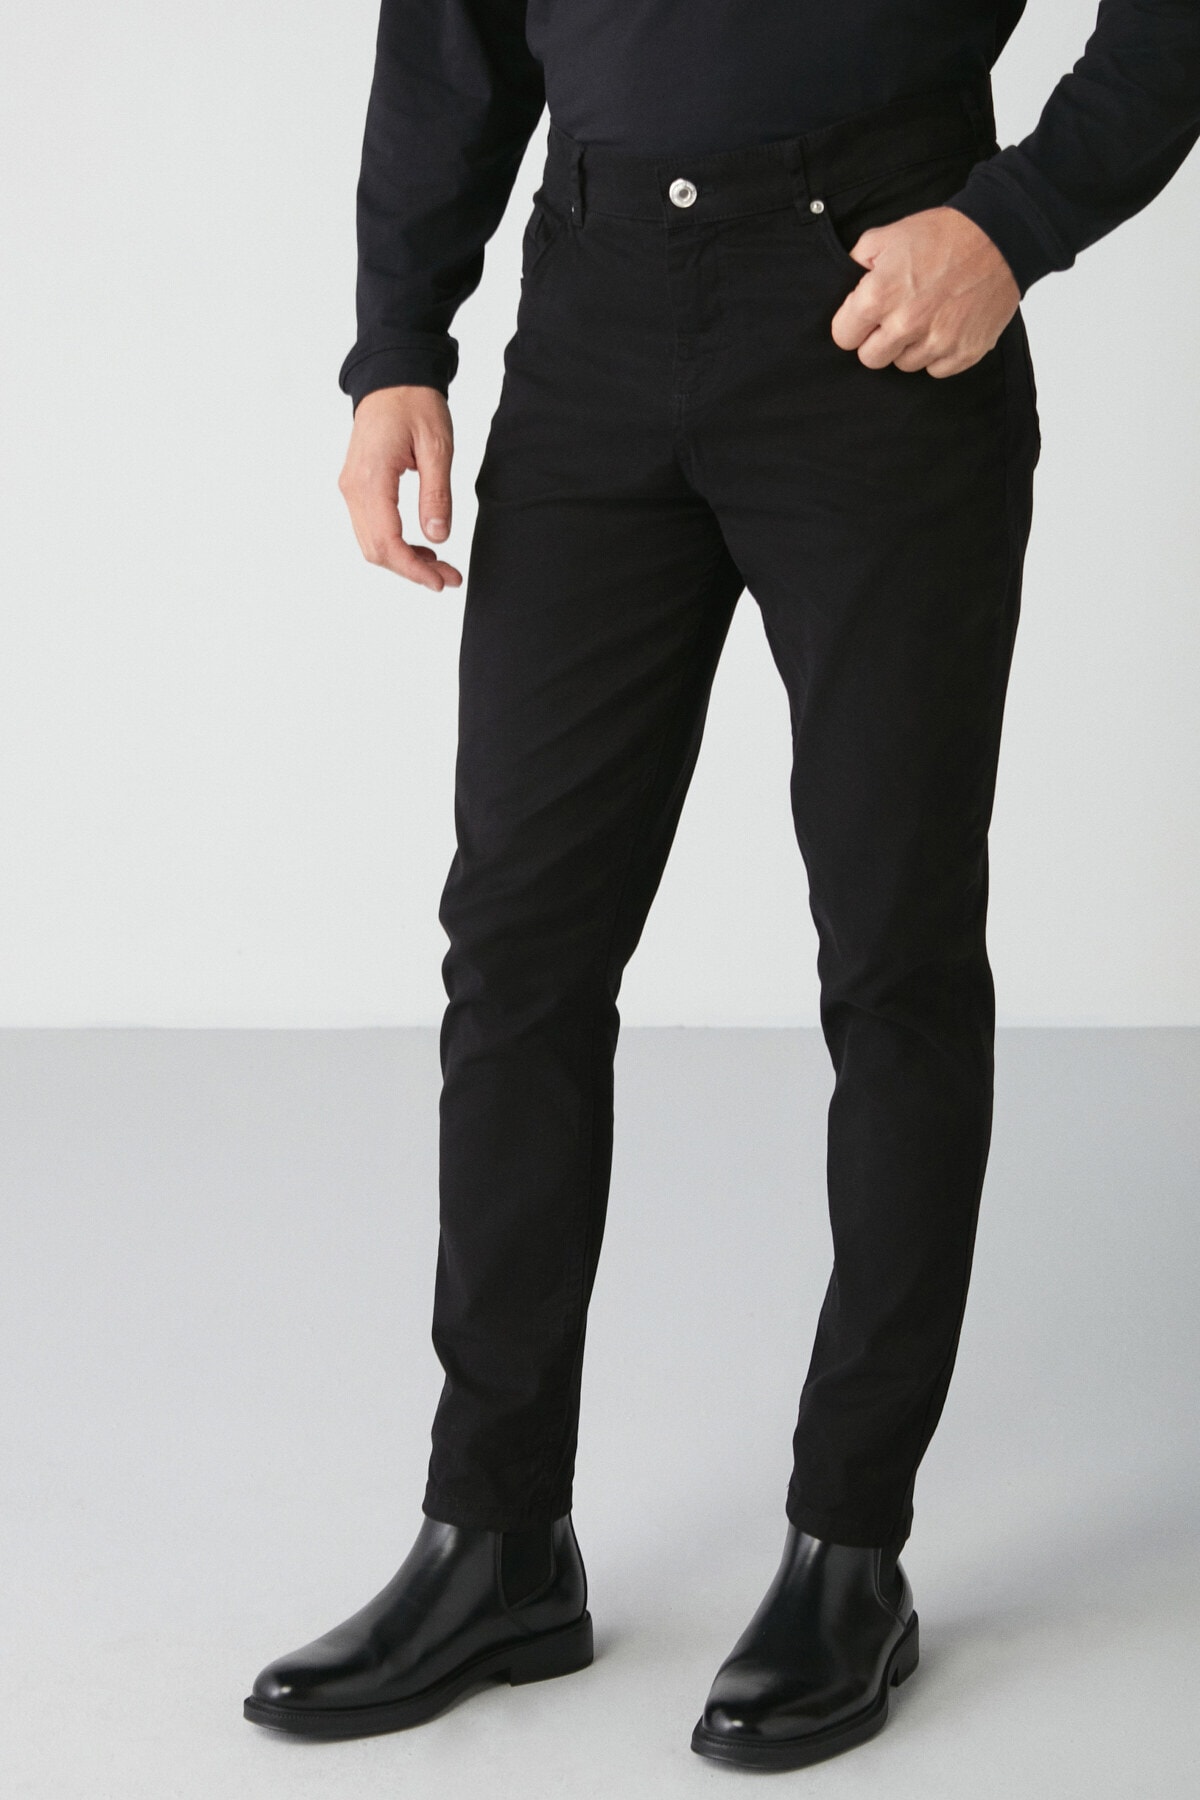 GRIMELANGE Raves Men's Chino Cotton Elastane Fabric Black Trousers